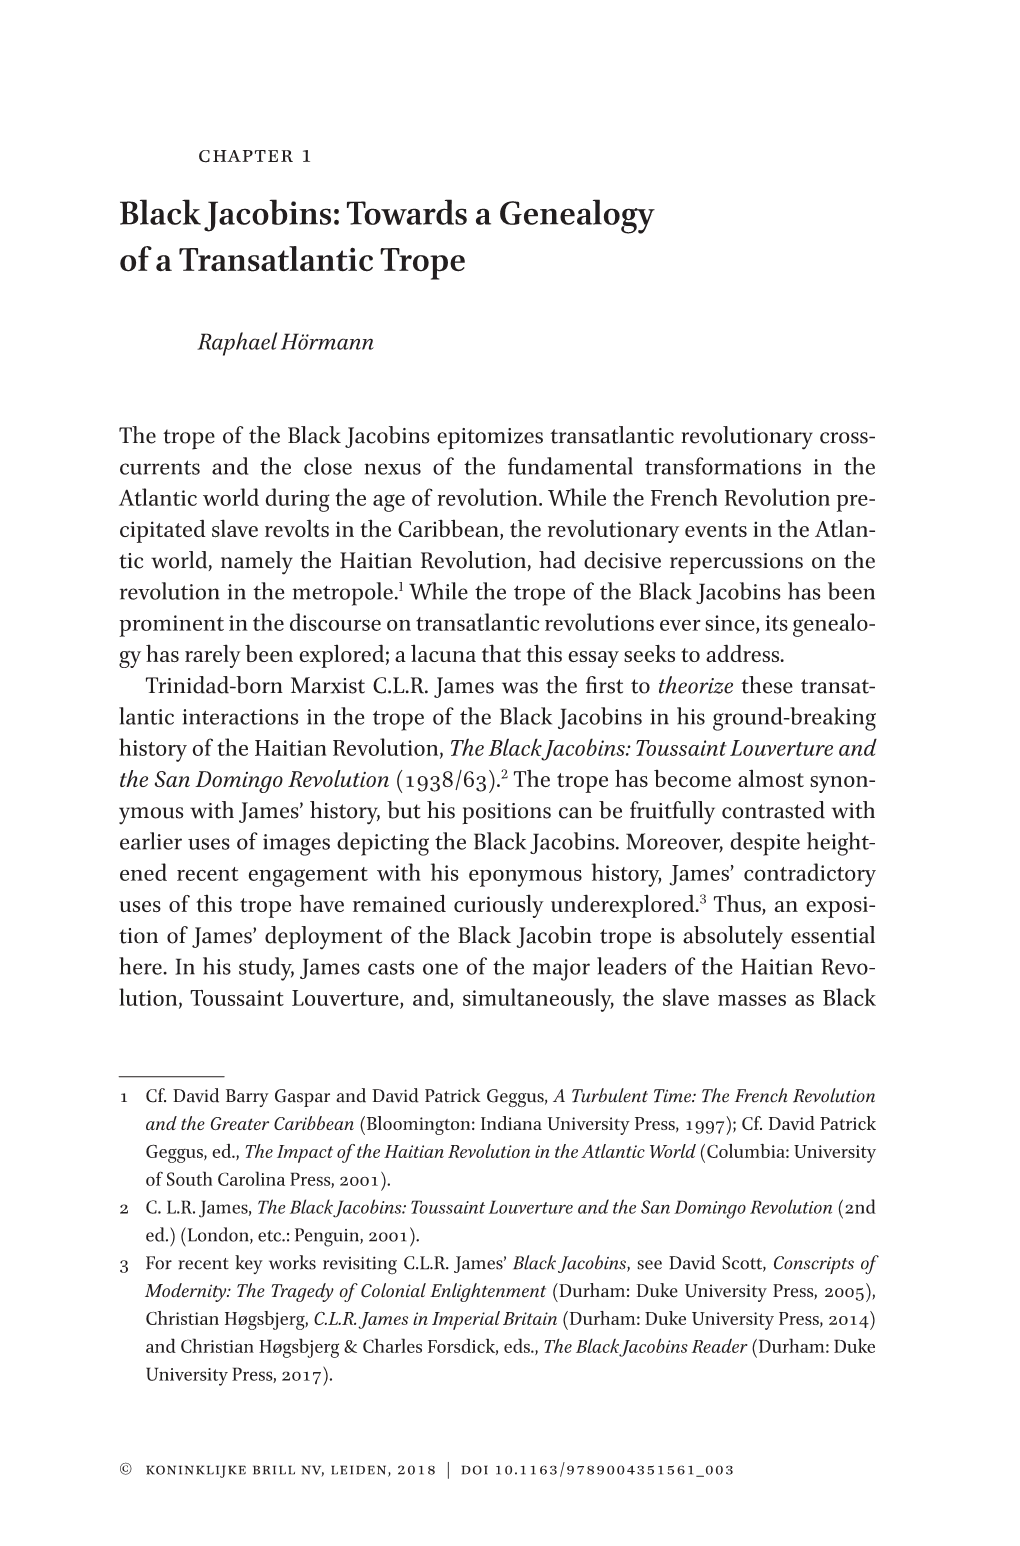 Black Jacobins: Towards a Genealogy of a Transatlantic Trope